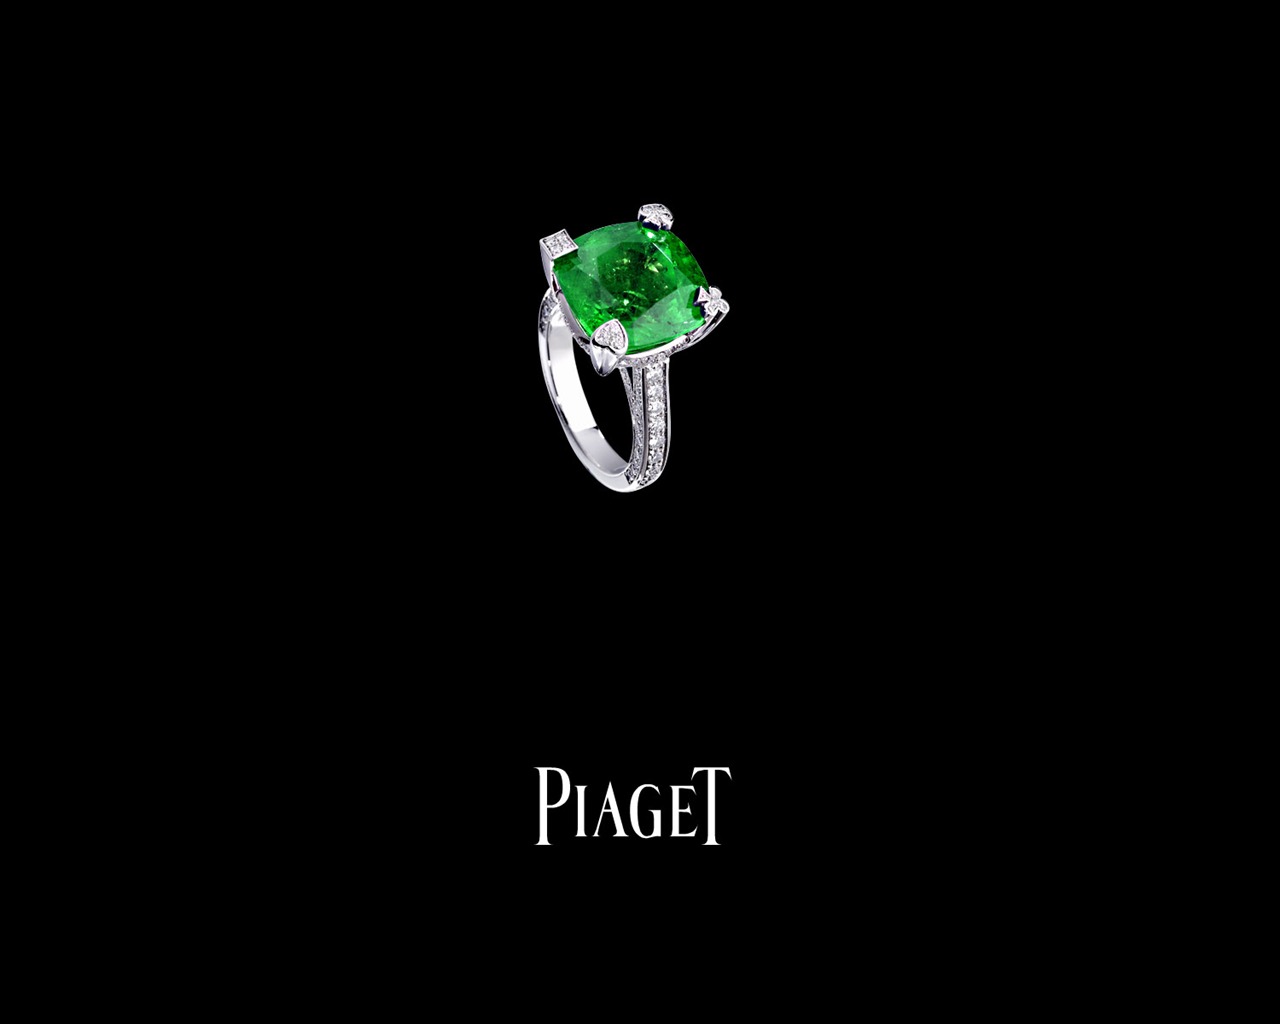 Piaget diamond jewelry wallpaper (4) #12 - 1280x1024